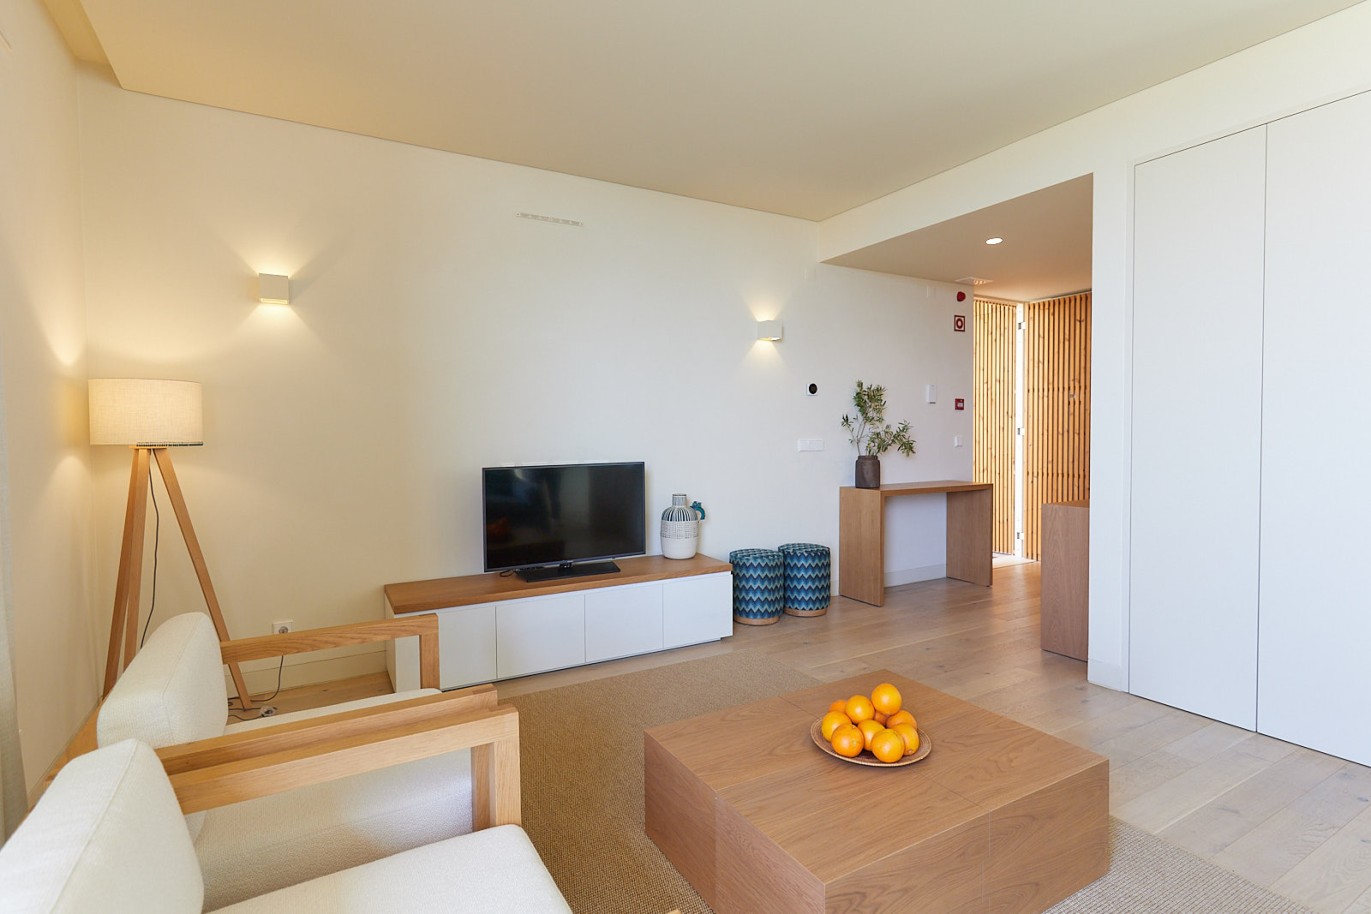 2 bedroom apartment in resort, for sale in Porches, Algarve_230645